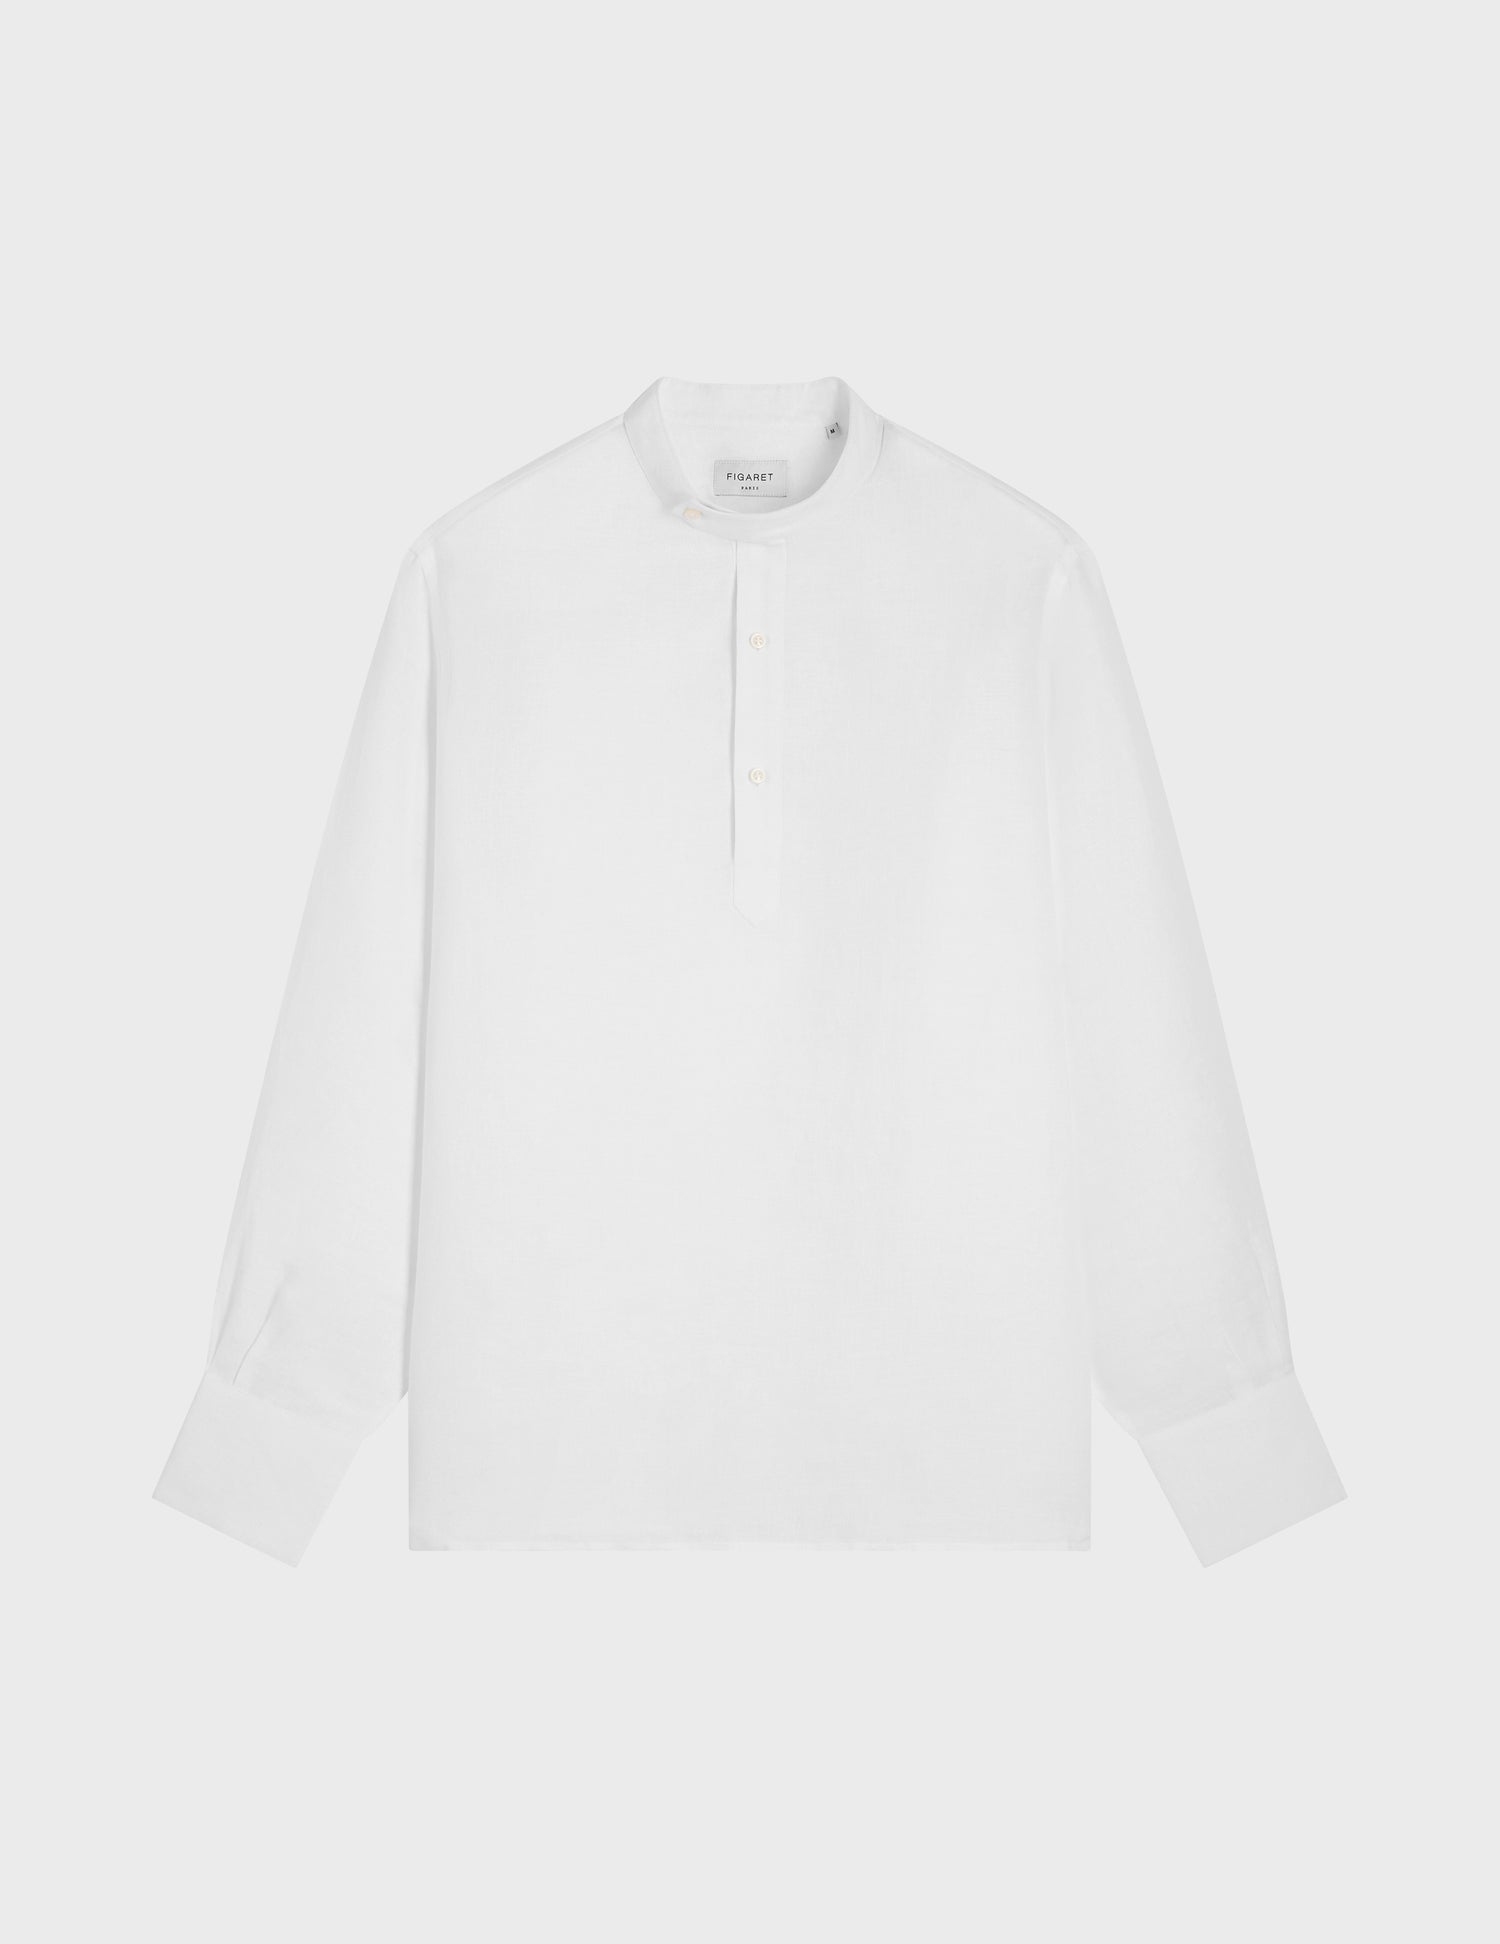 Arthur white linen shirt - Linen - Officer Collar#3